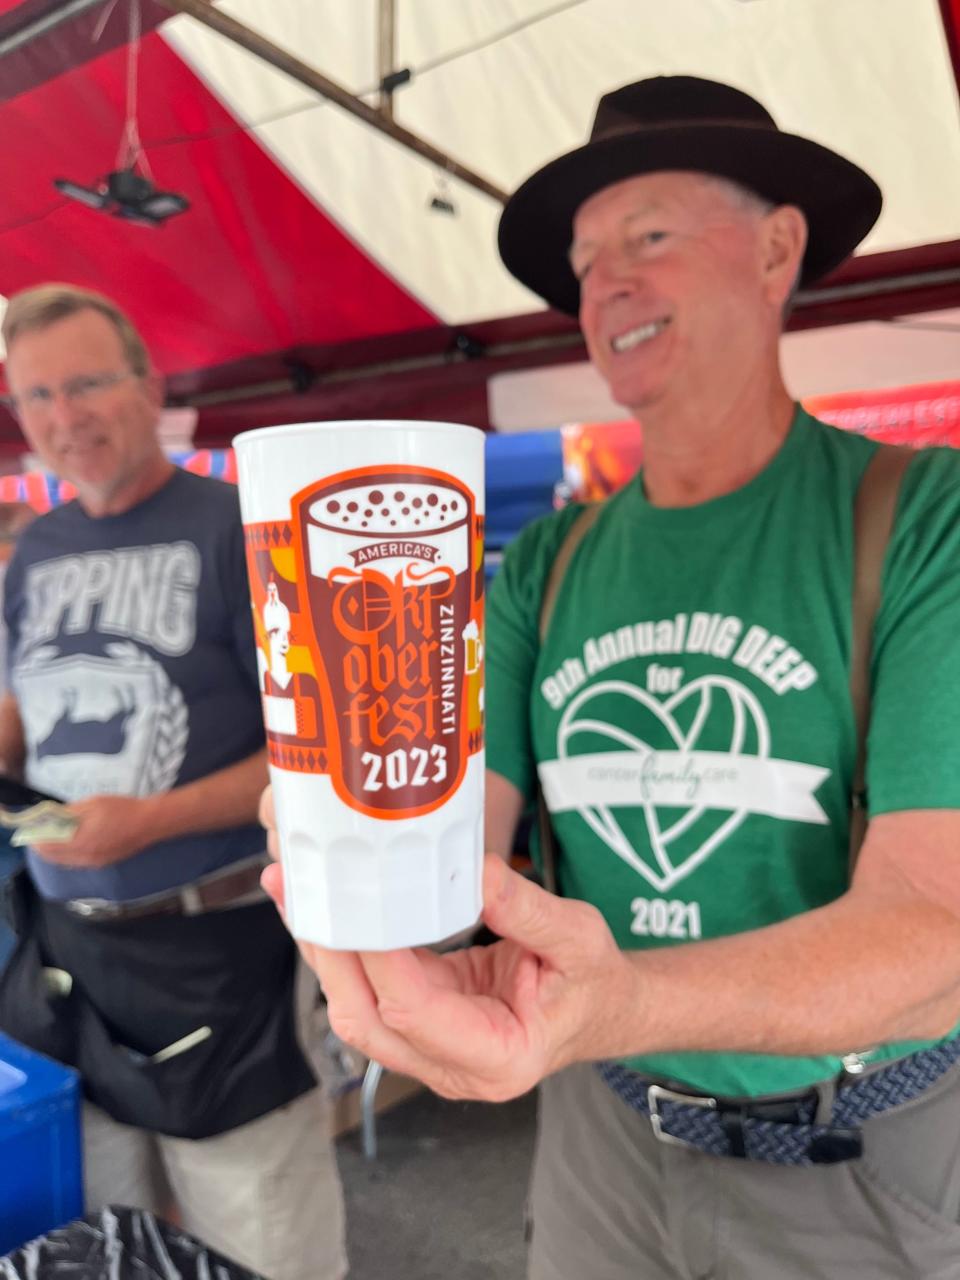 Buy an Oktoberfest souvenir mug at a beer booth.